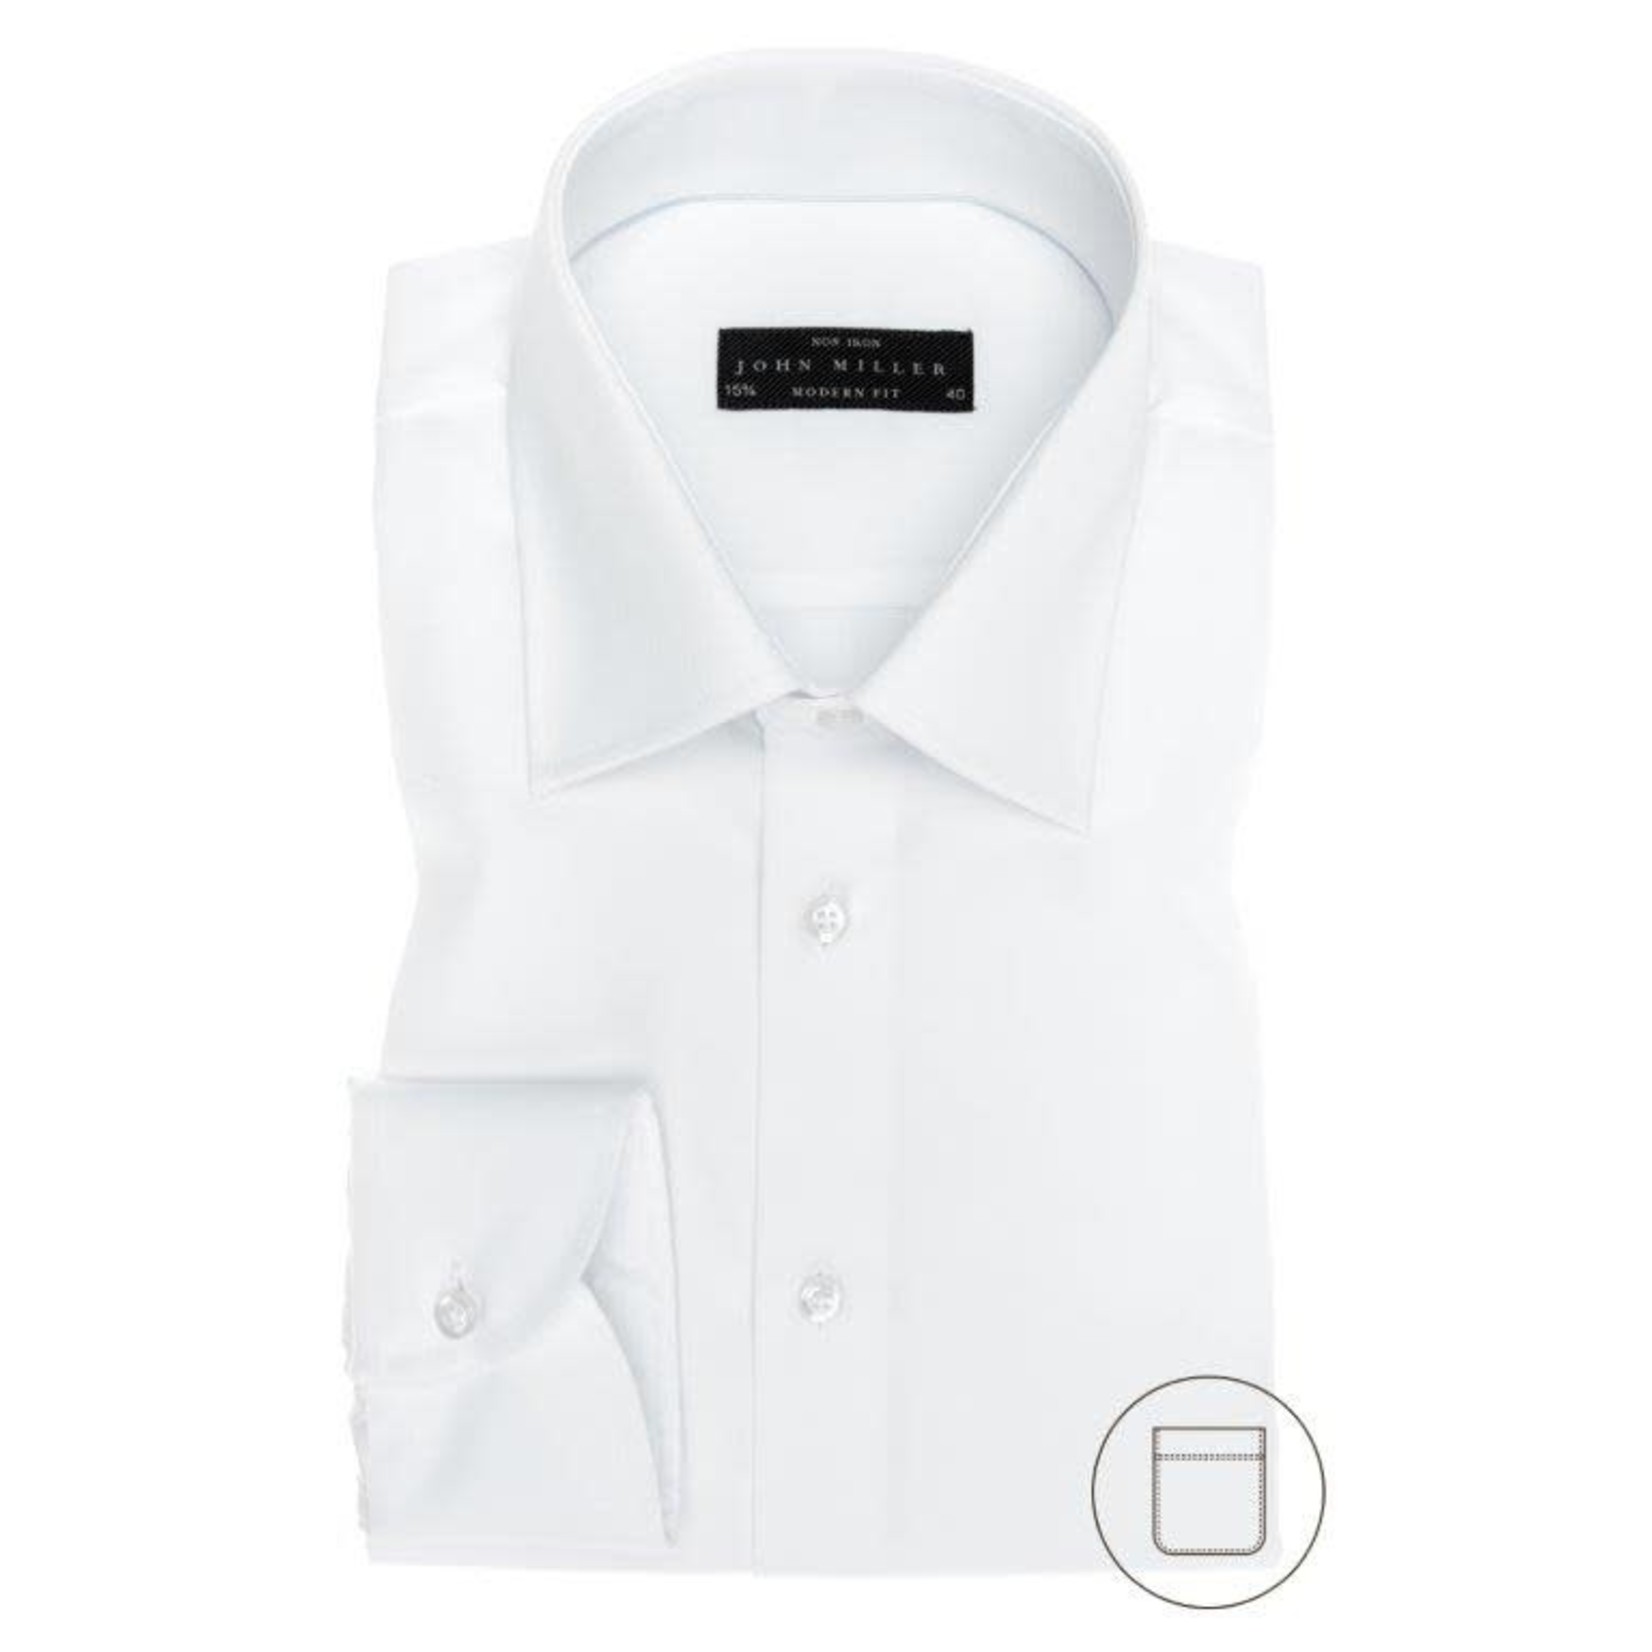 John Miller modern fit overhemd wit met semi spread boord